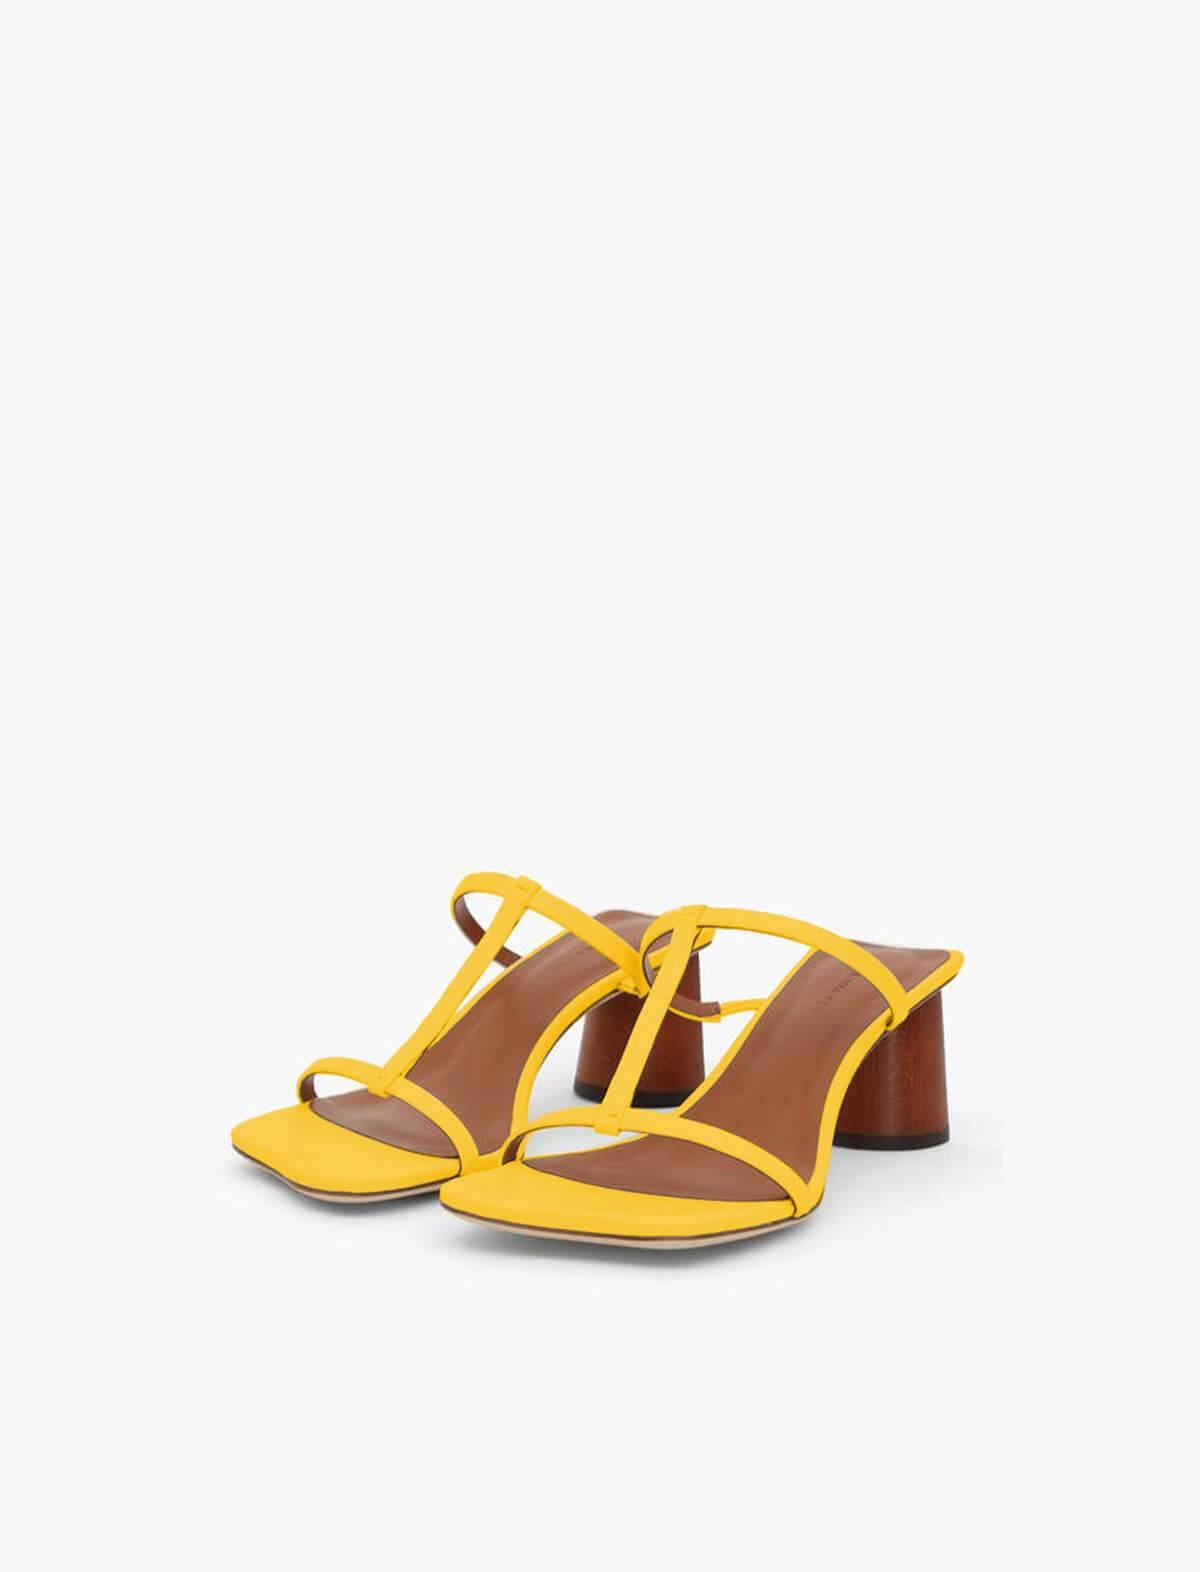 REJINA PYO Erin Leather Sandals In Yellow | CLOSET Singapore